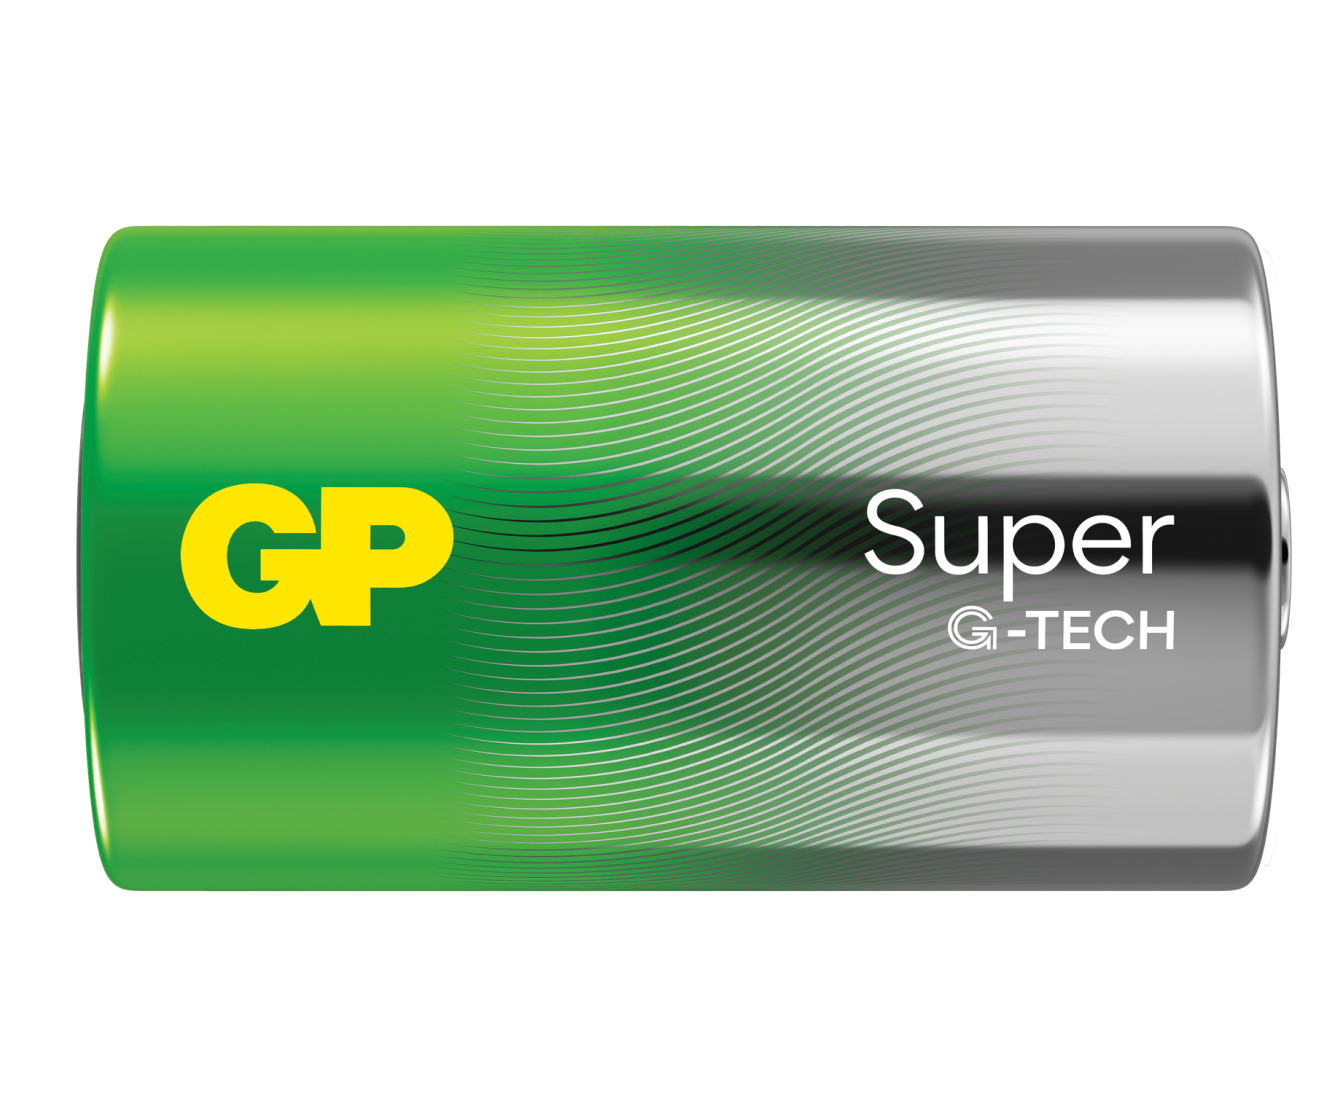 GP Super Alkaline D Size Batteries